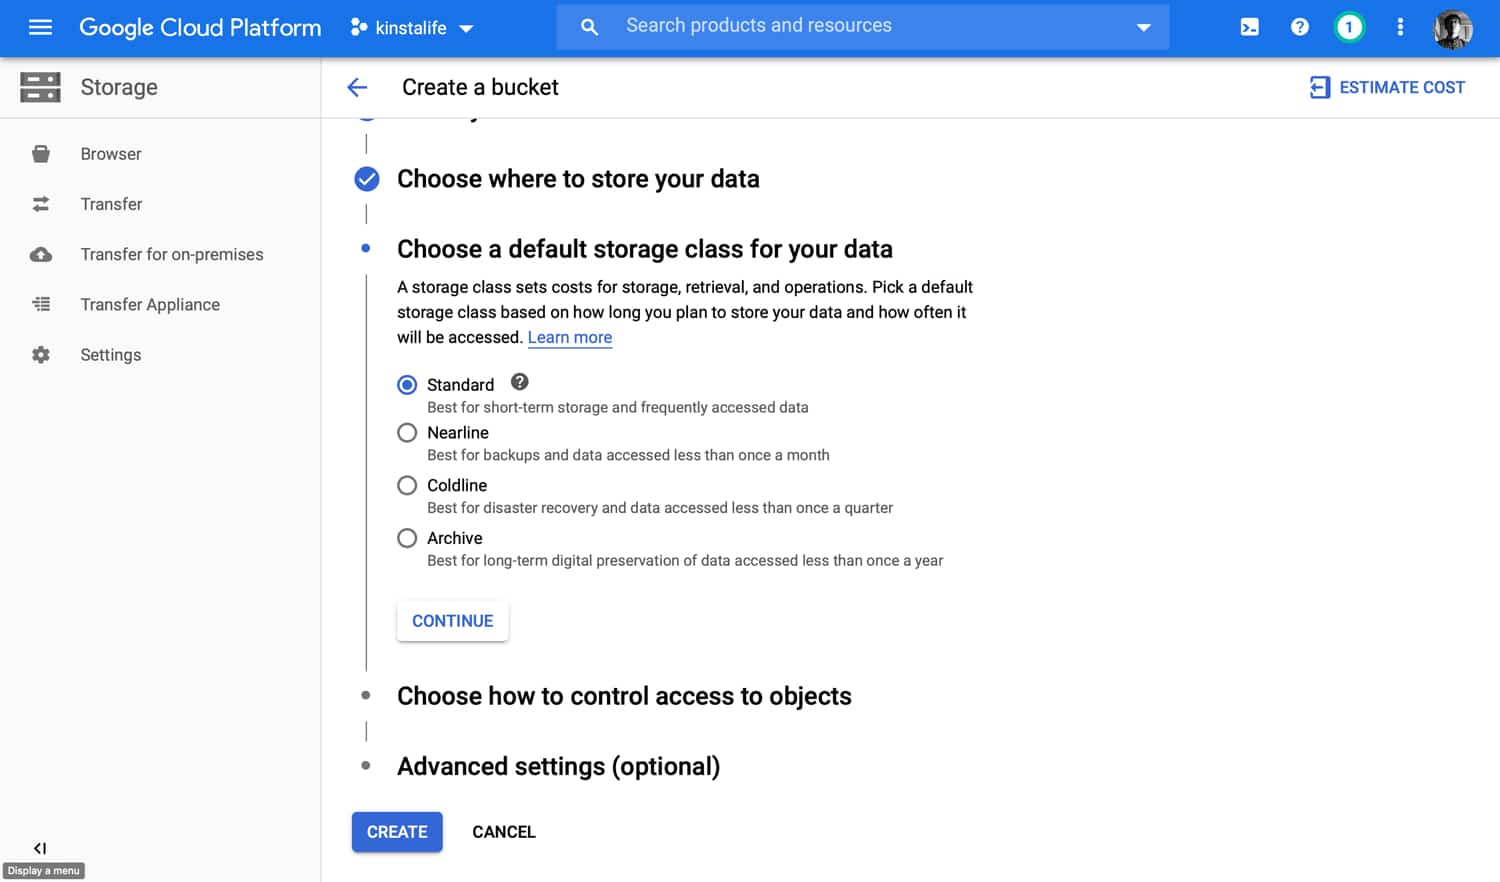 Schermata Create a bucket in Google Cloud Platform: è evidenziata la sezione "Choose a default storage classe for your data".